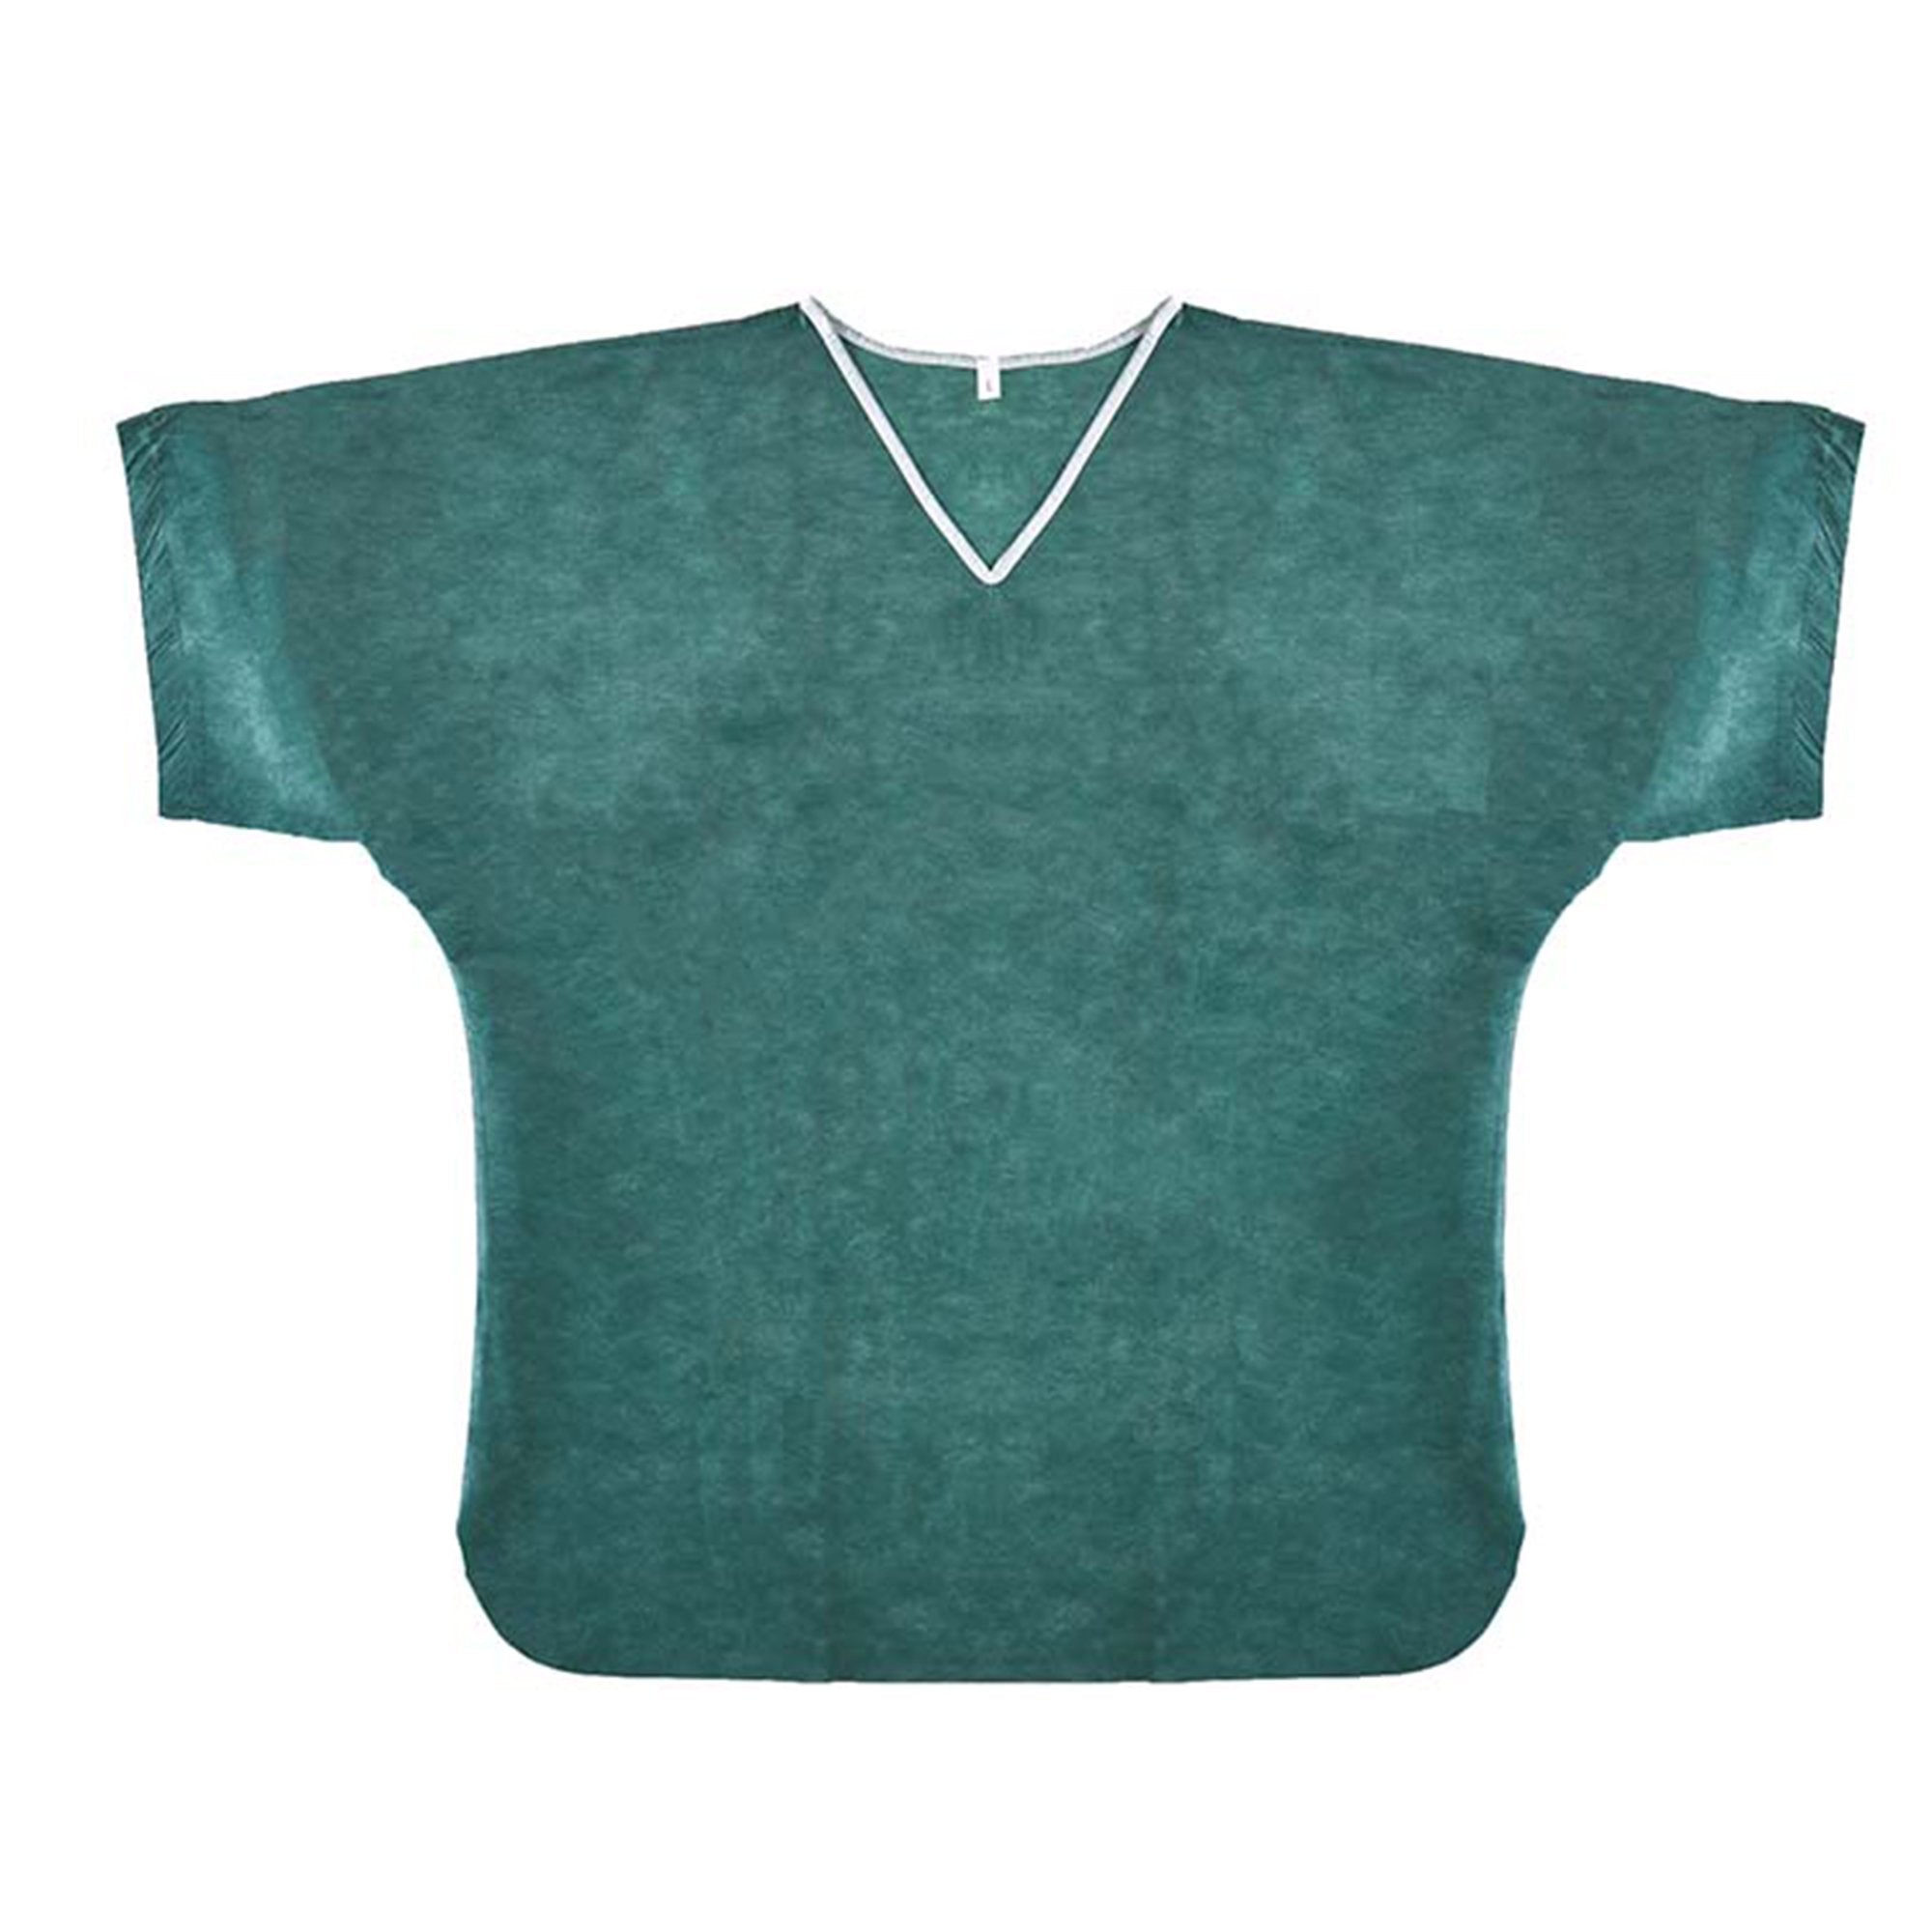 Simply Soft Scrub Shirt, Small, Dark Green / Navy -Case of 30